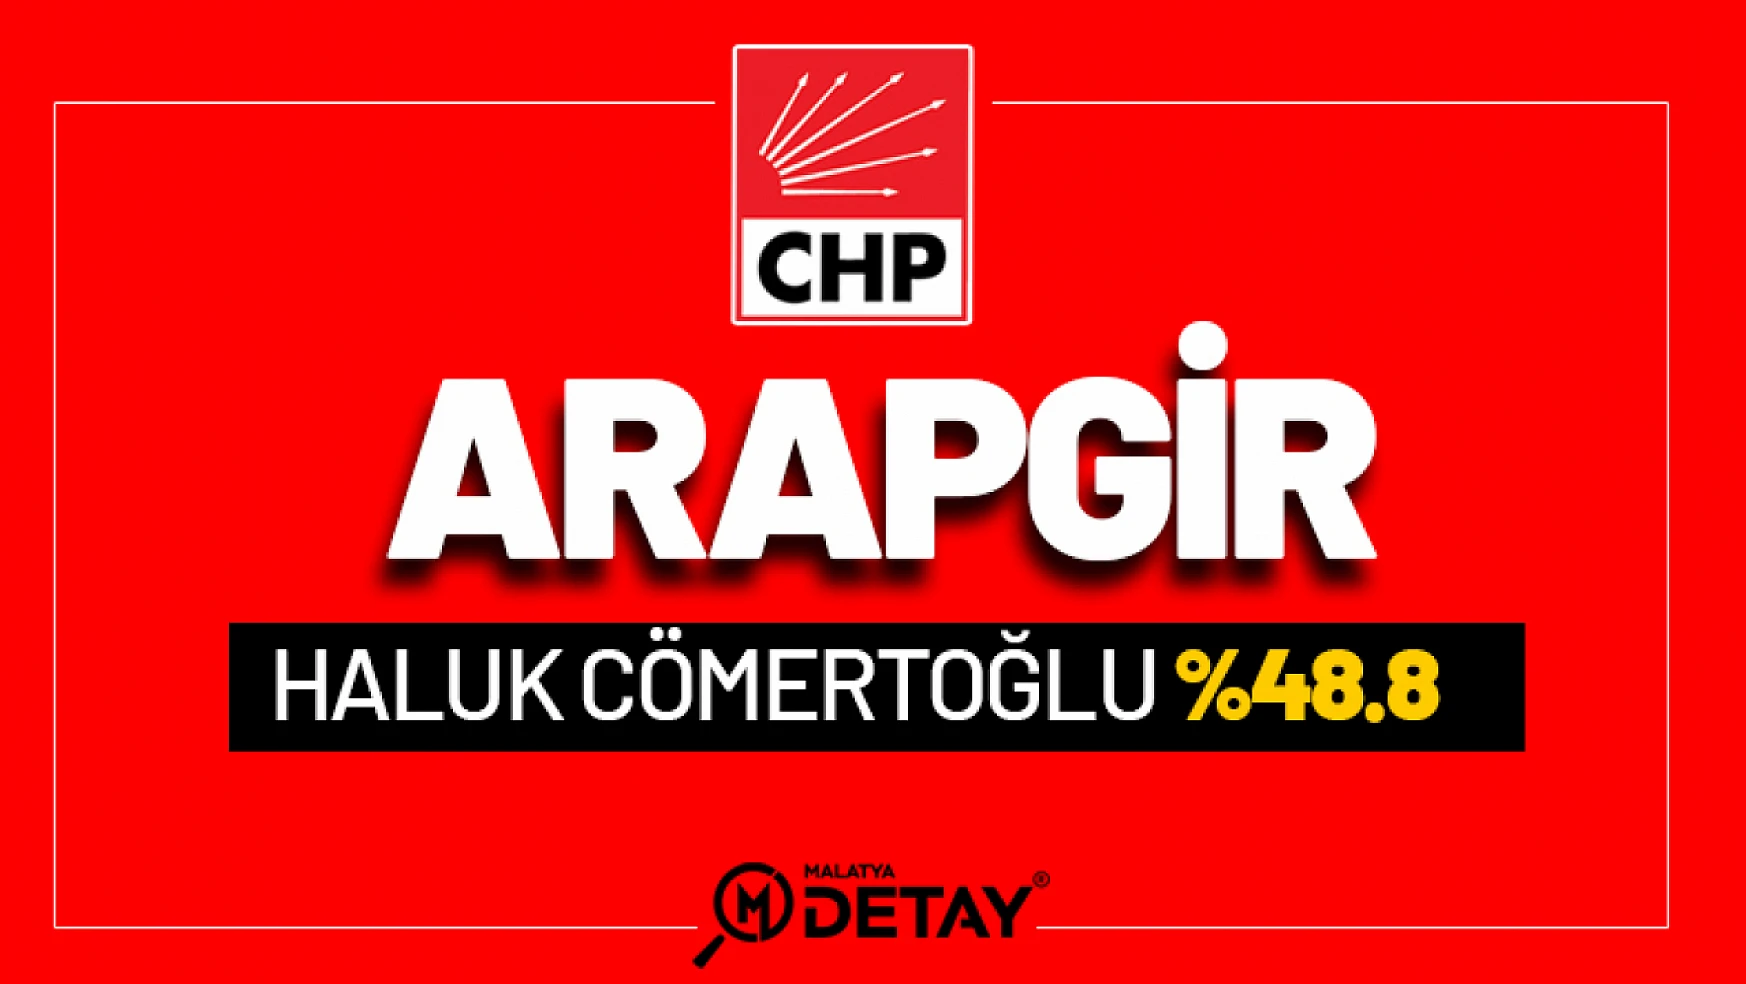 Arapgir'i Yine CHP Kazandı